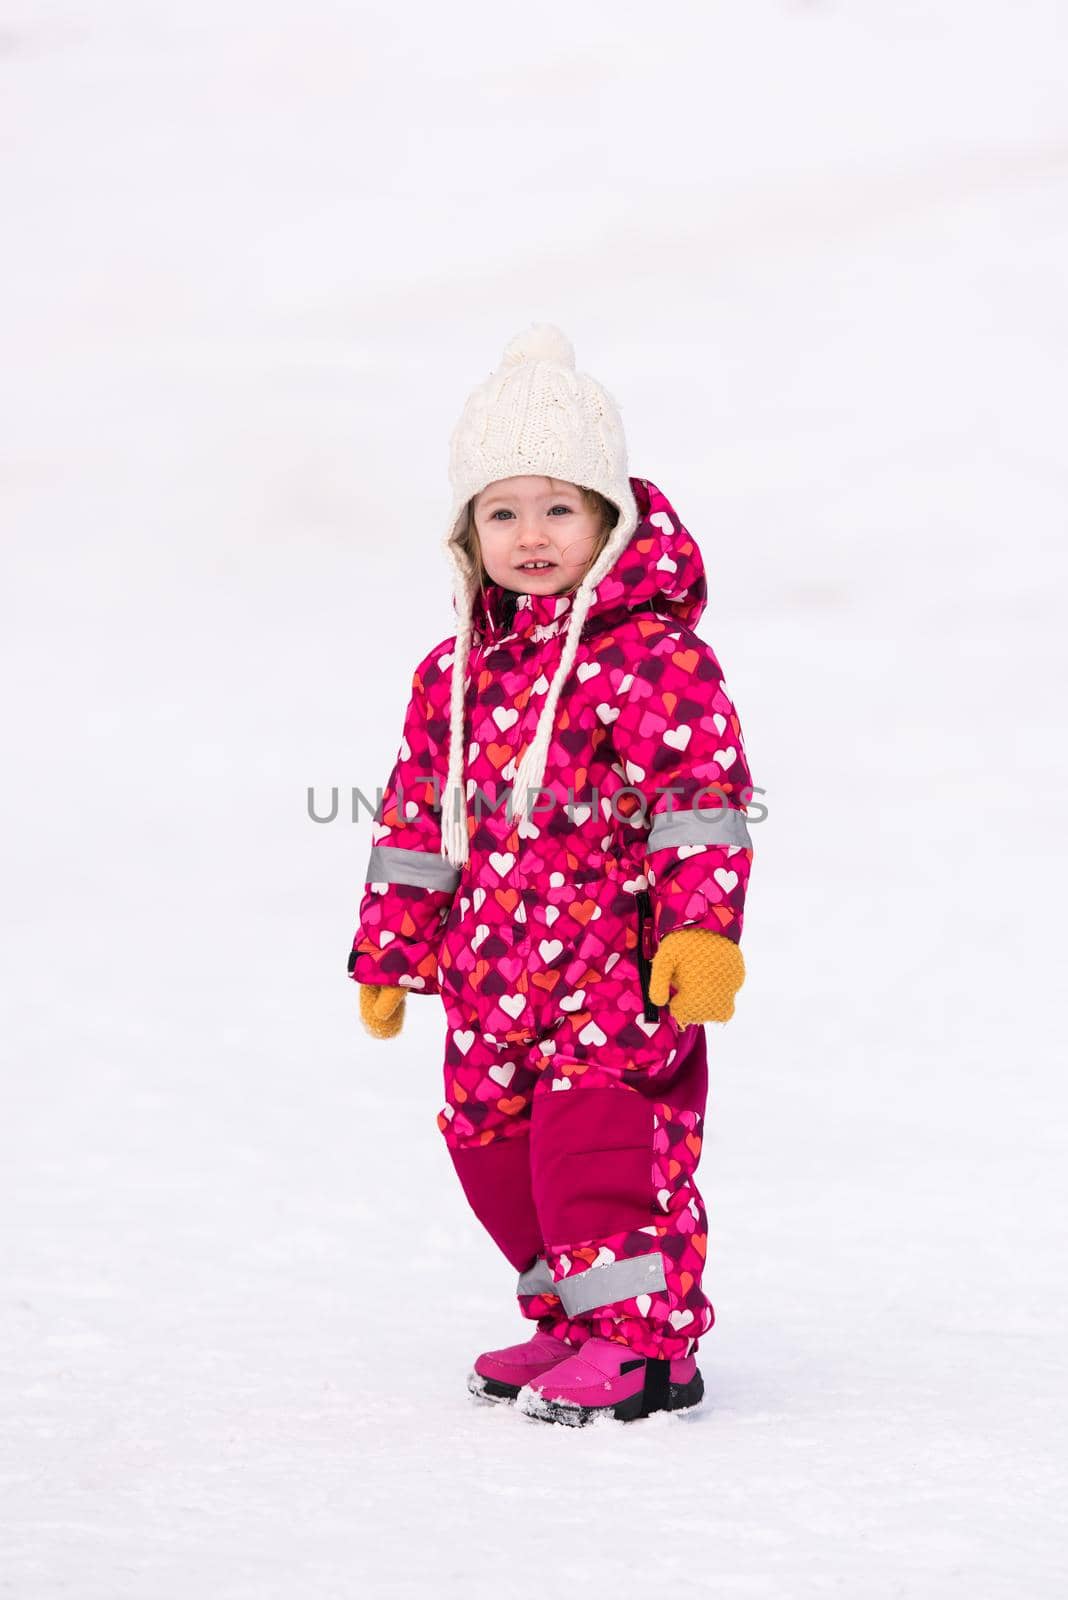 little girl having fun at snowy winter day by dotshock